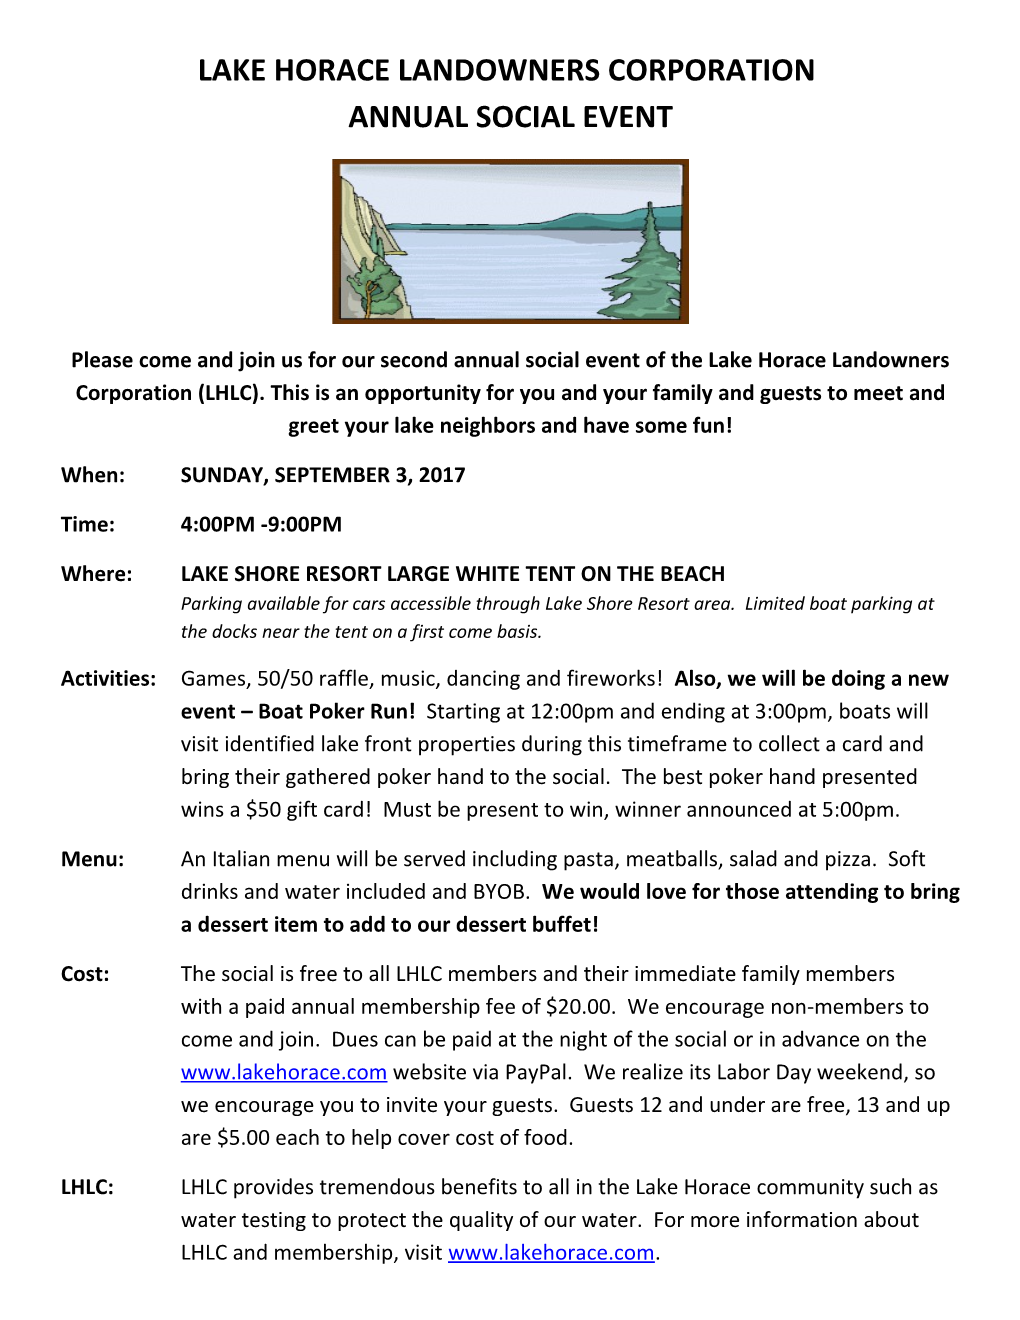 Lake Horace Landowners Corporation Annual Social Event